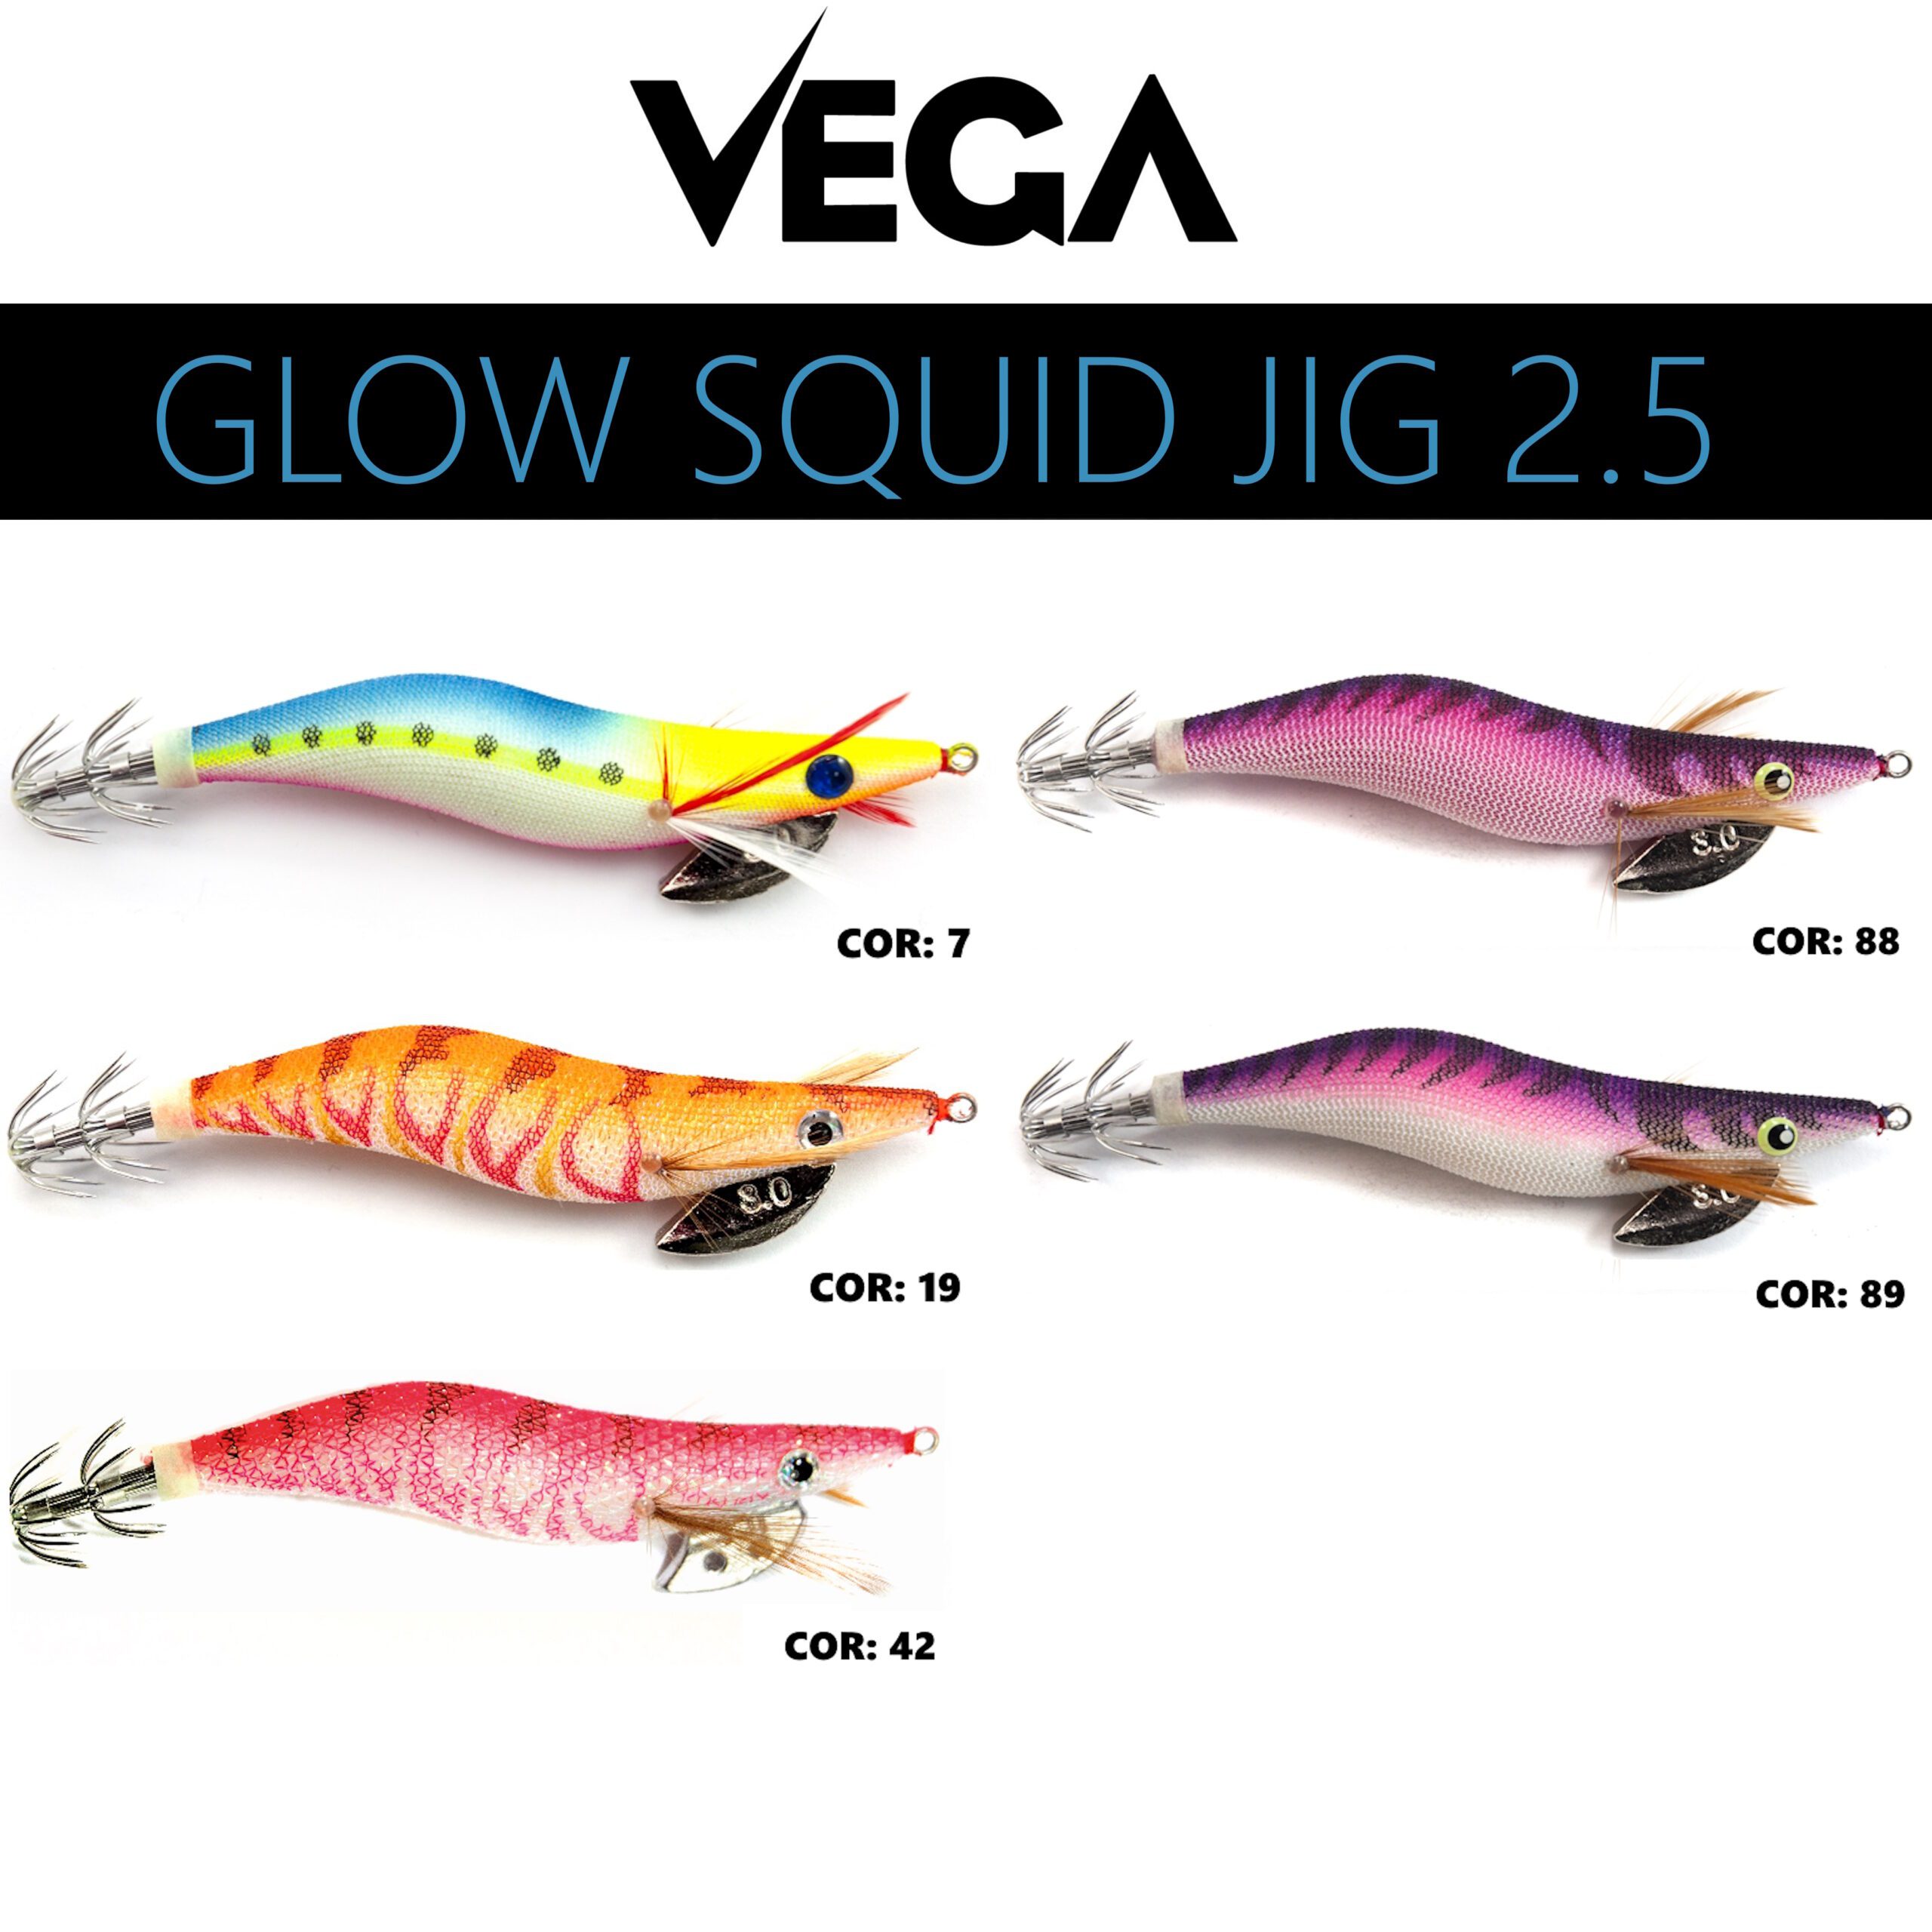 Toneiras Vega Glow Squid Jig Tamanho 2.5 - Pesca Barrento